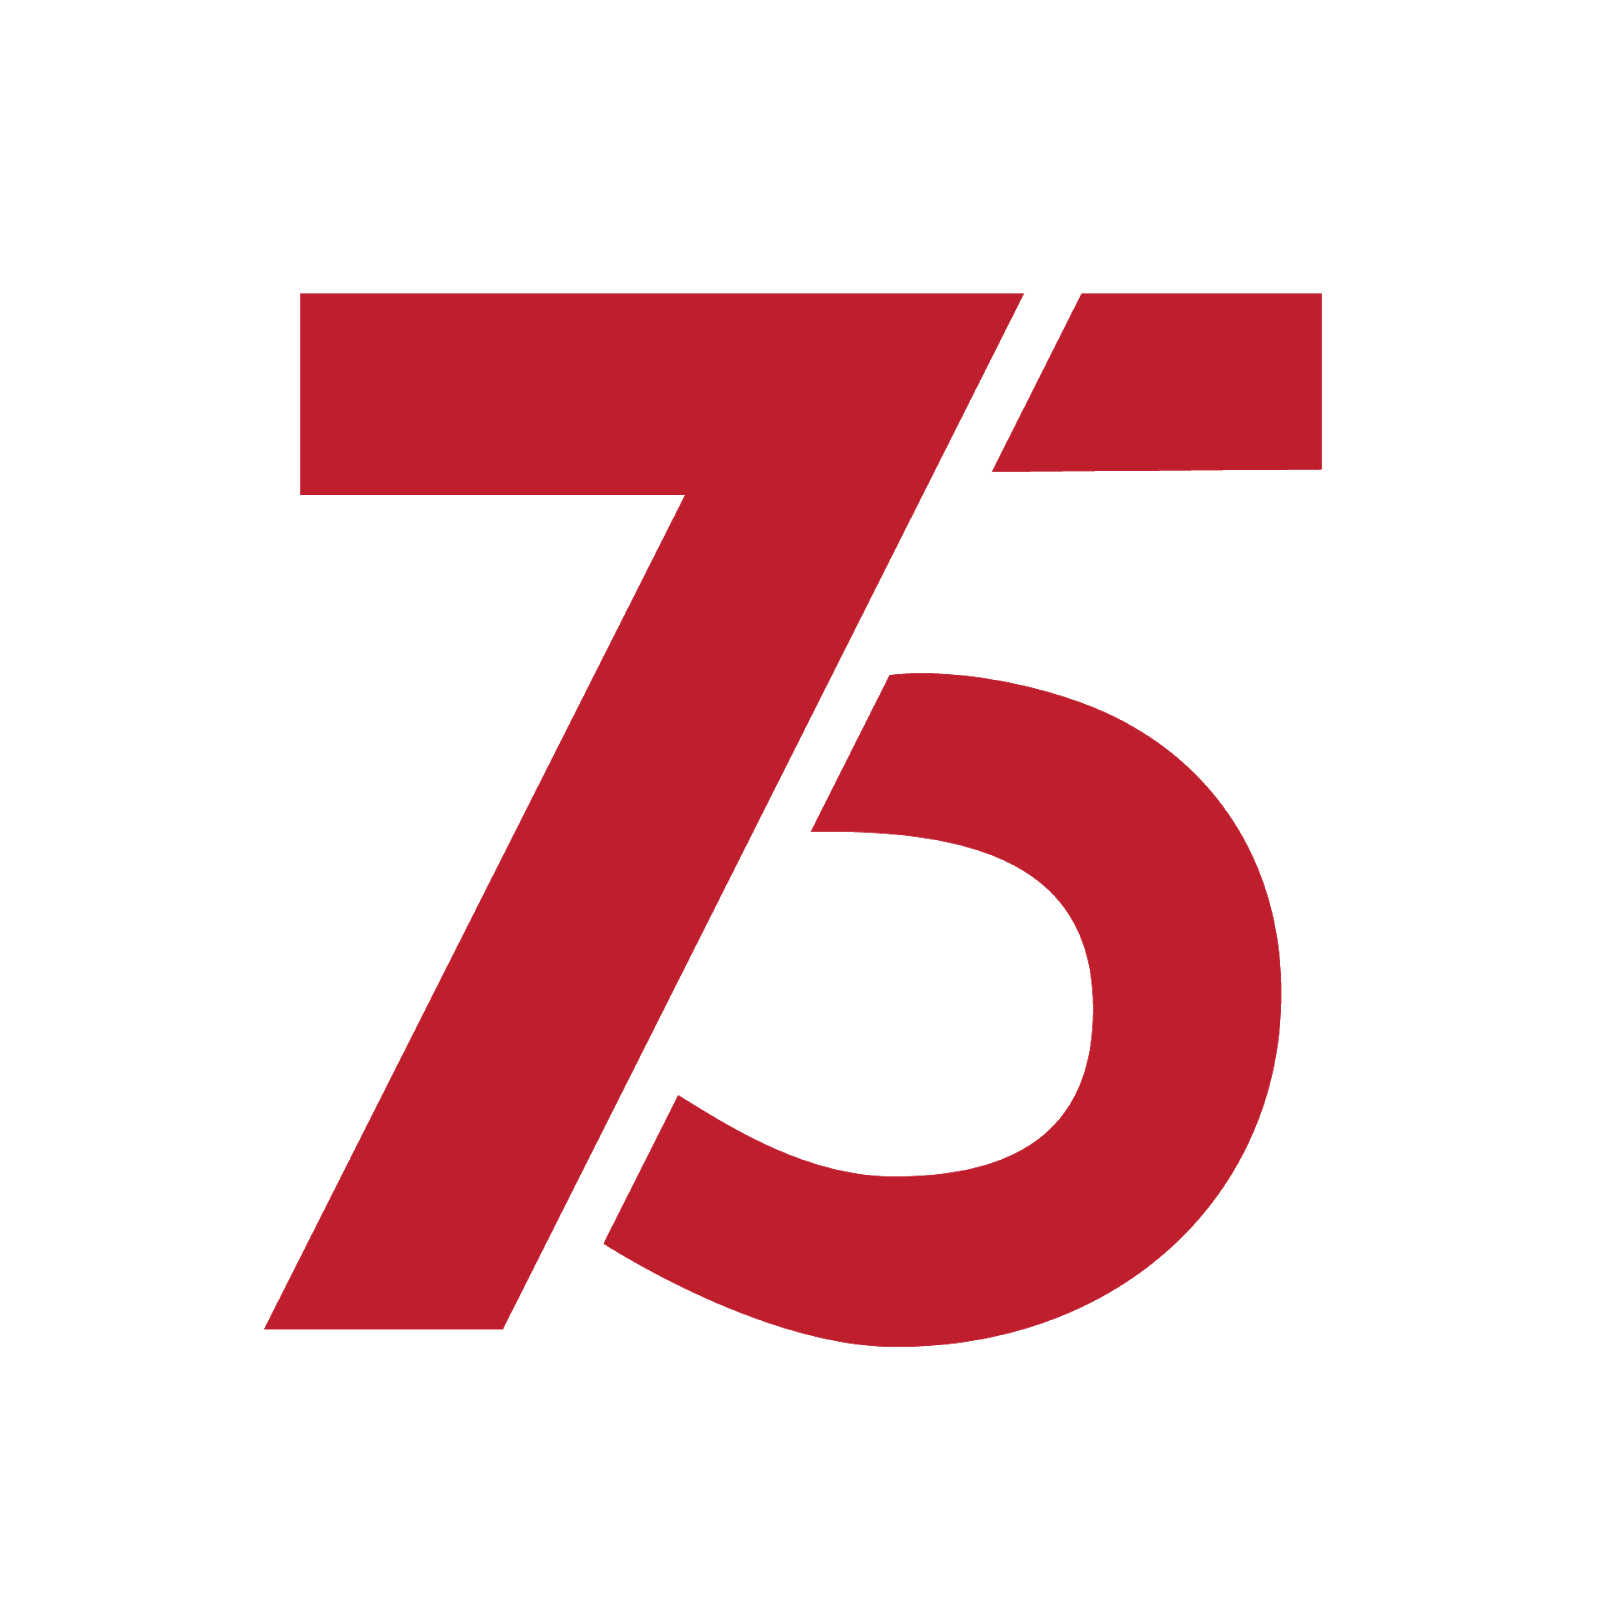 Logo Hut Ri Ke 75  Download Kumpulan Contoh Surat dan 